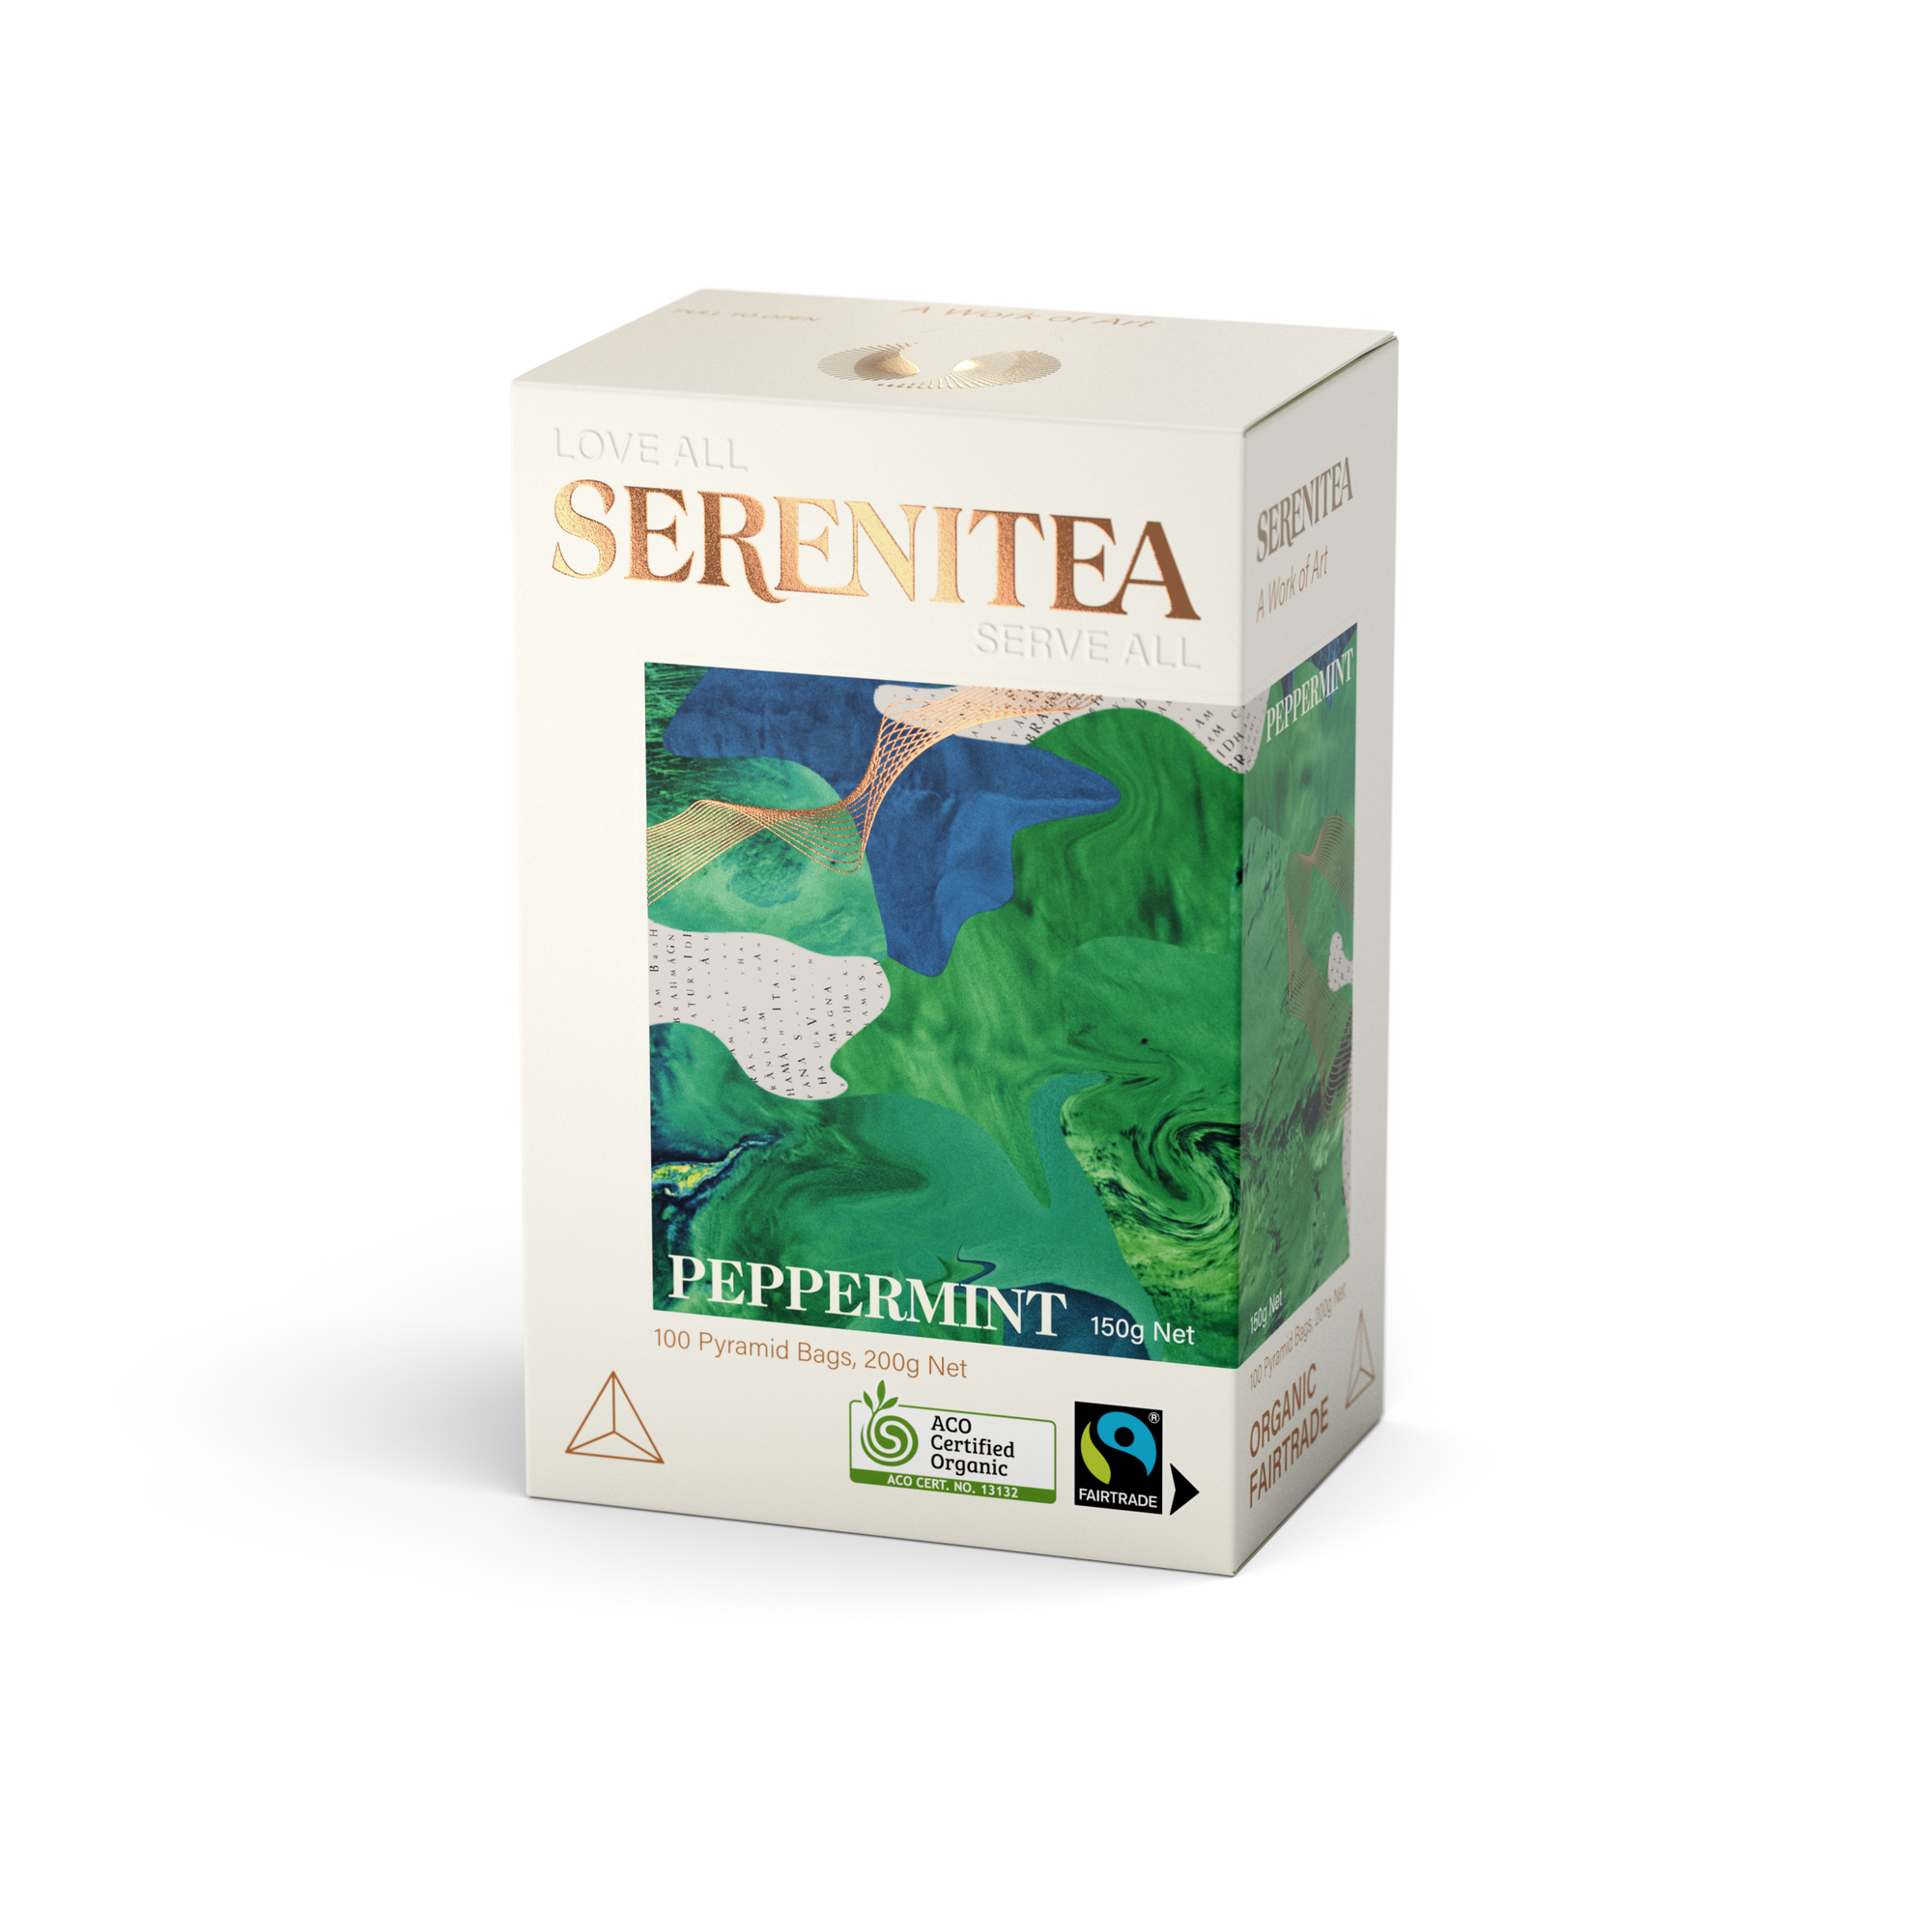 SereniTea Peppermint Pyramid Tea Bags